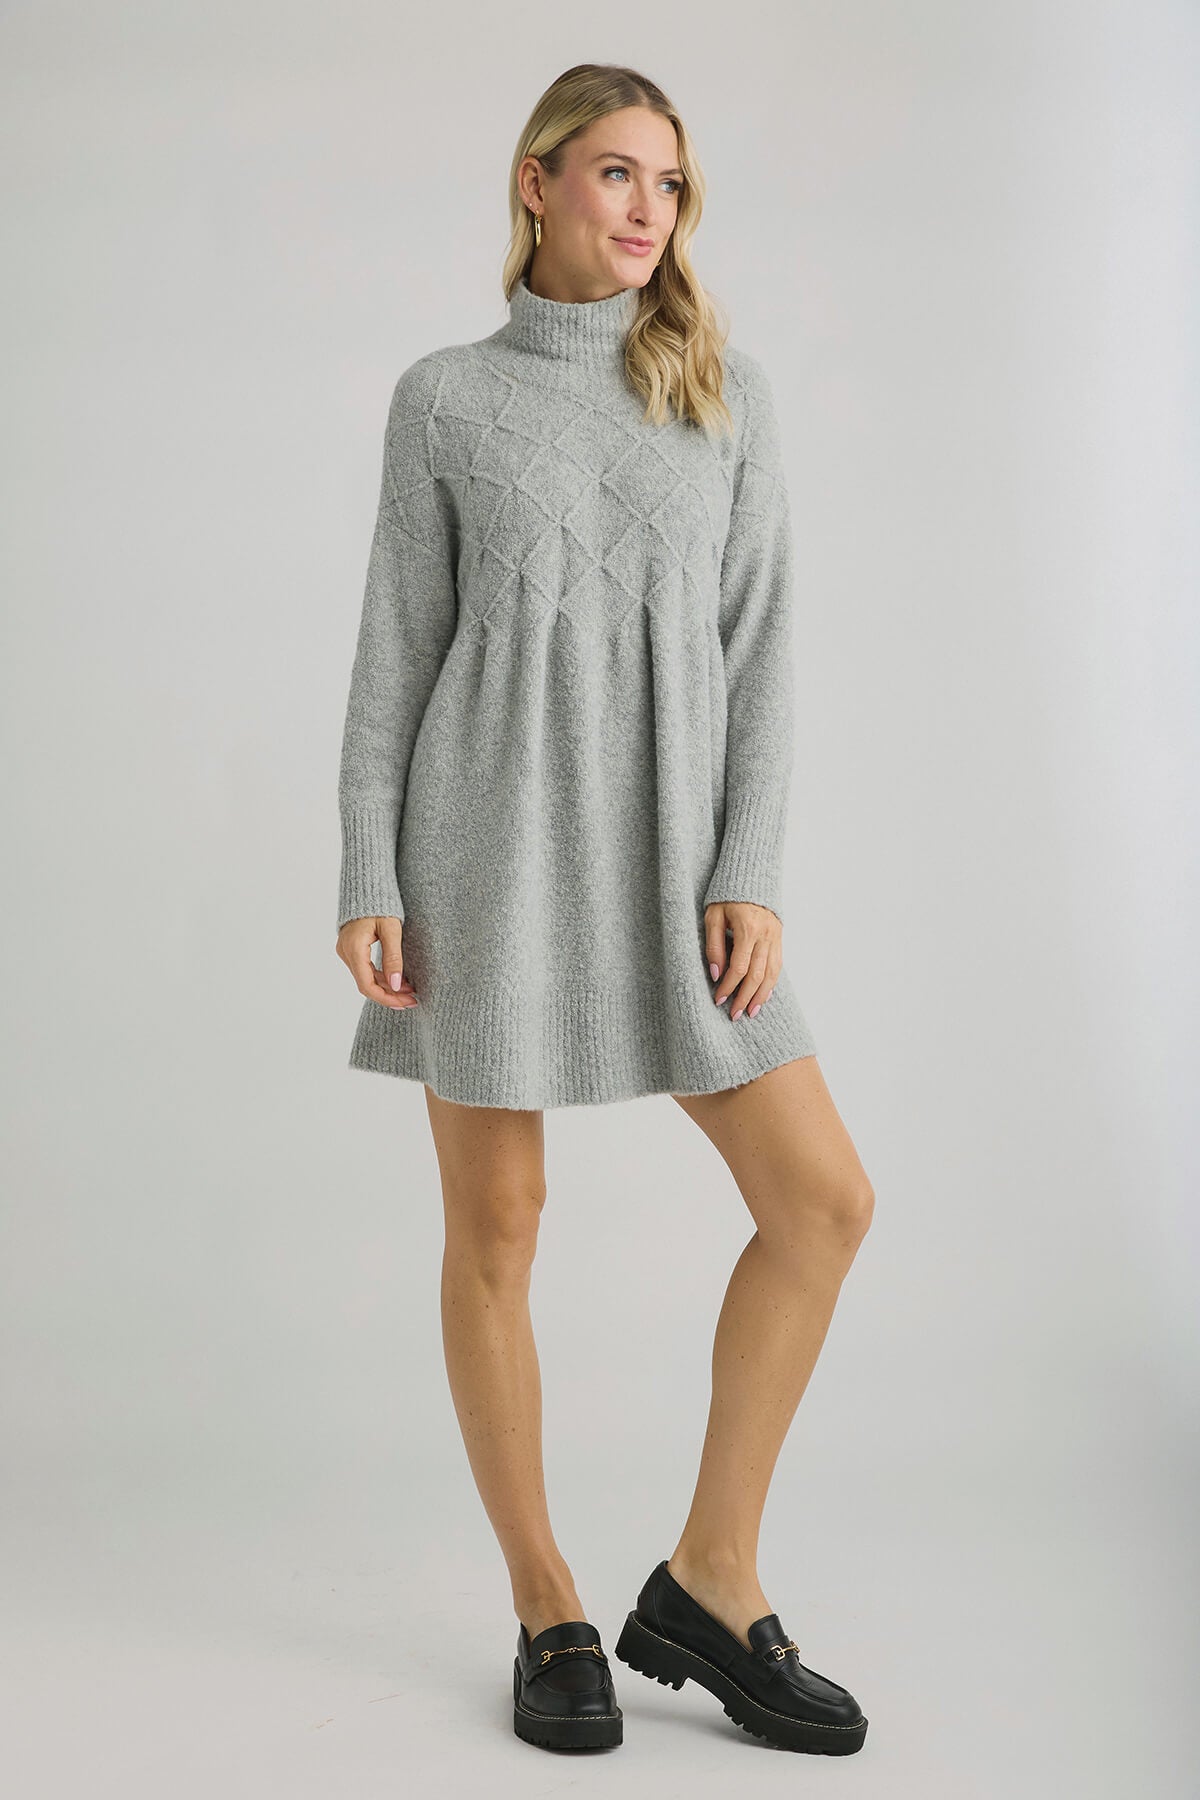 Gray Mini Dress - Crew Neck Sweater Dress - Ribbed Knit Heather Gray Dress